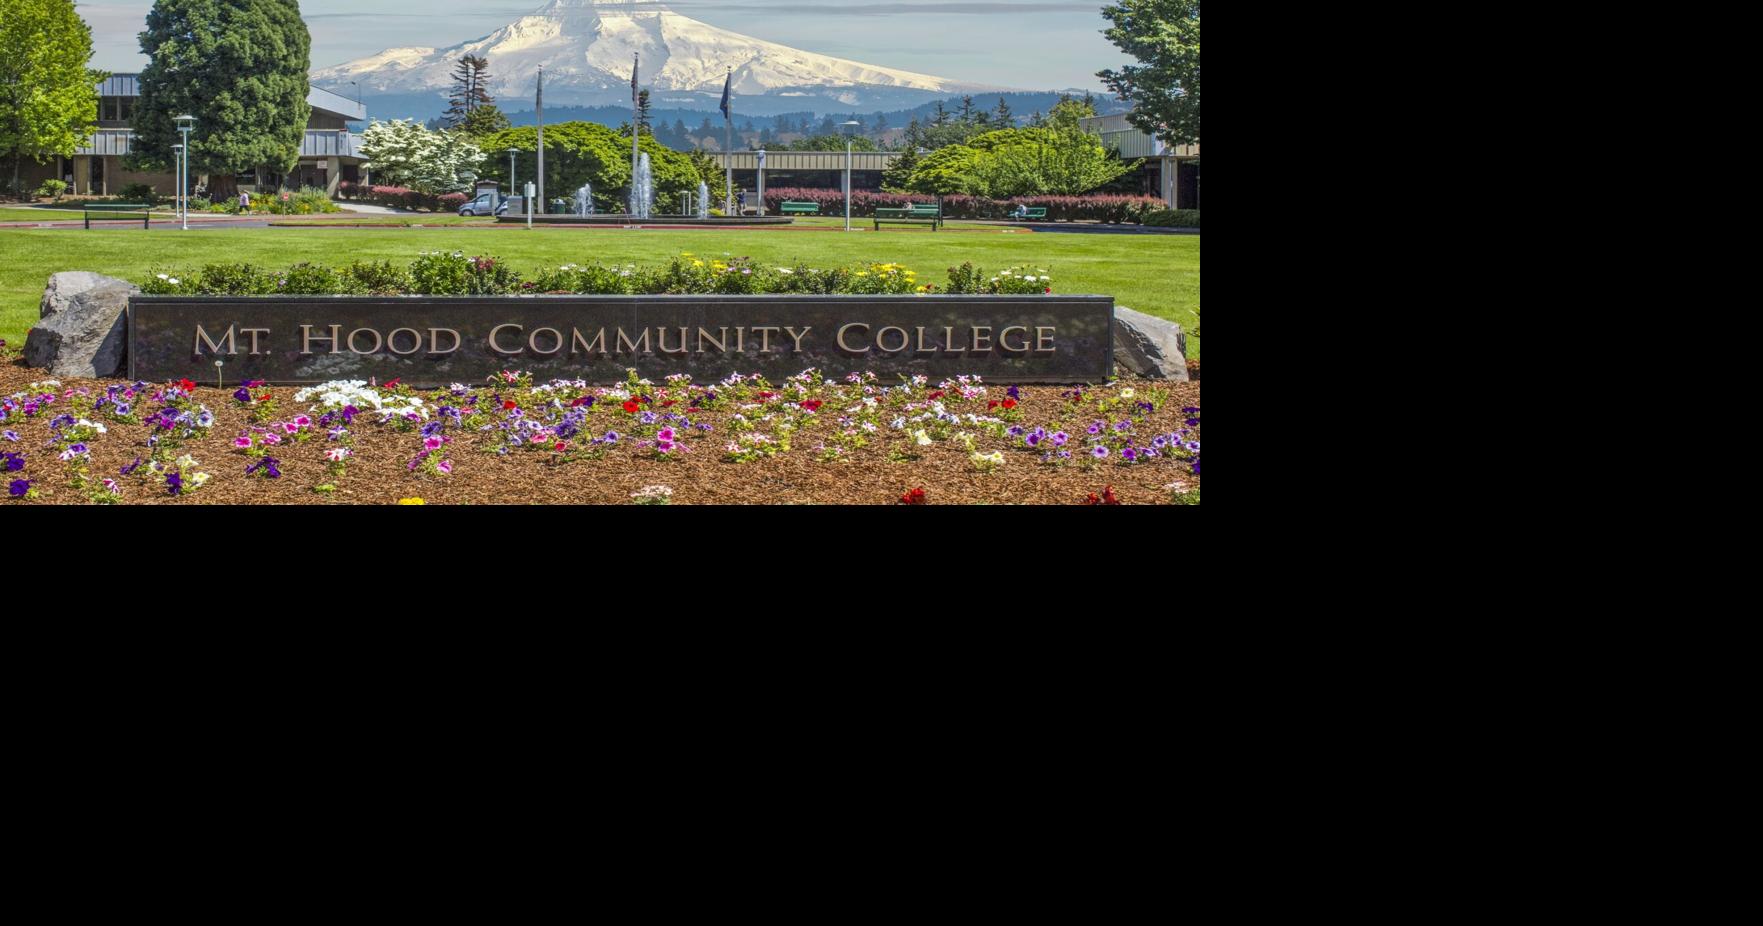 How Mt. Hood Community College discovered University of Oregon